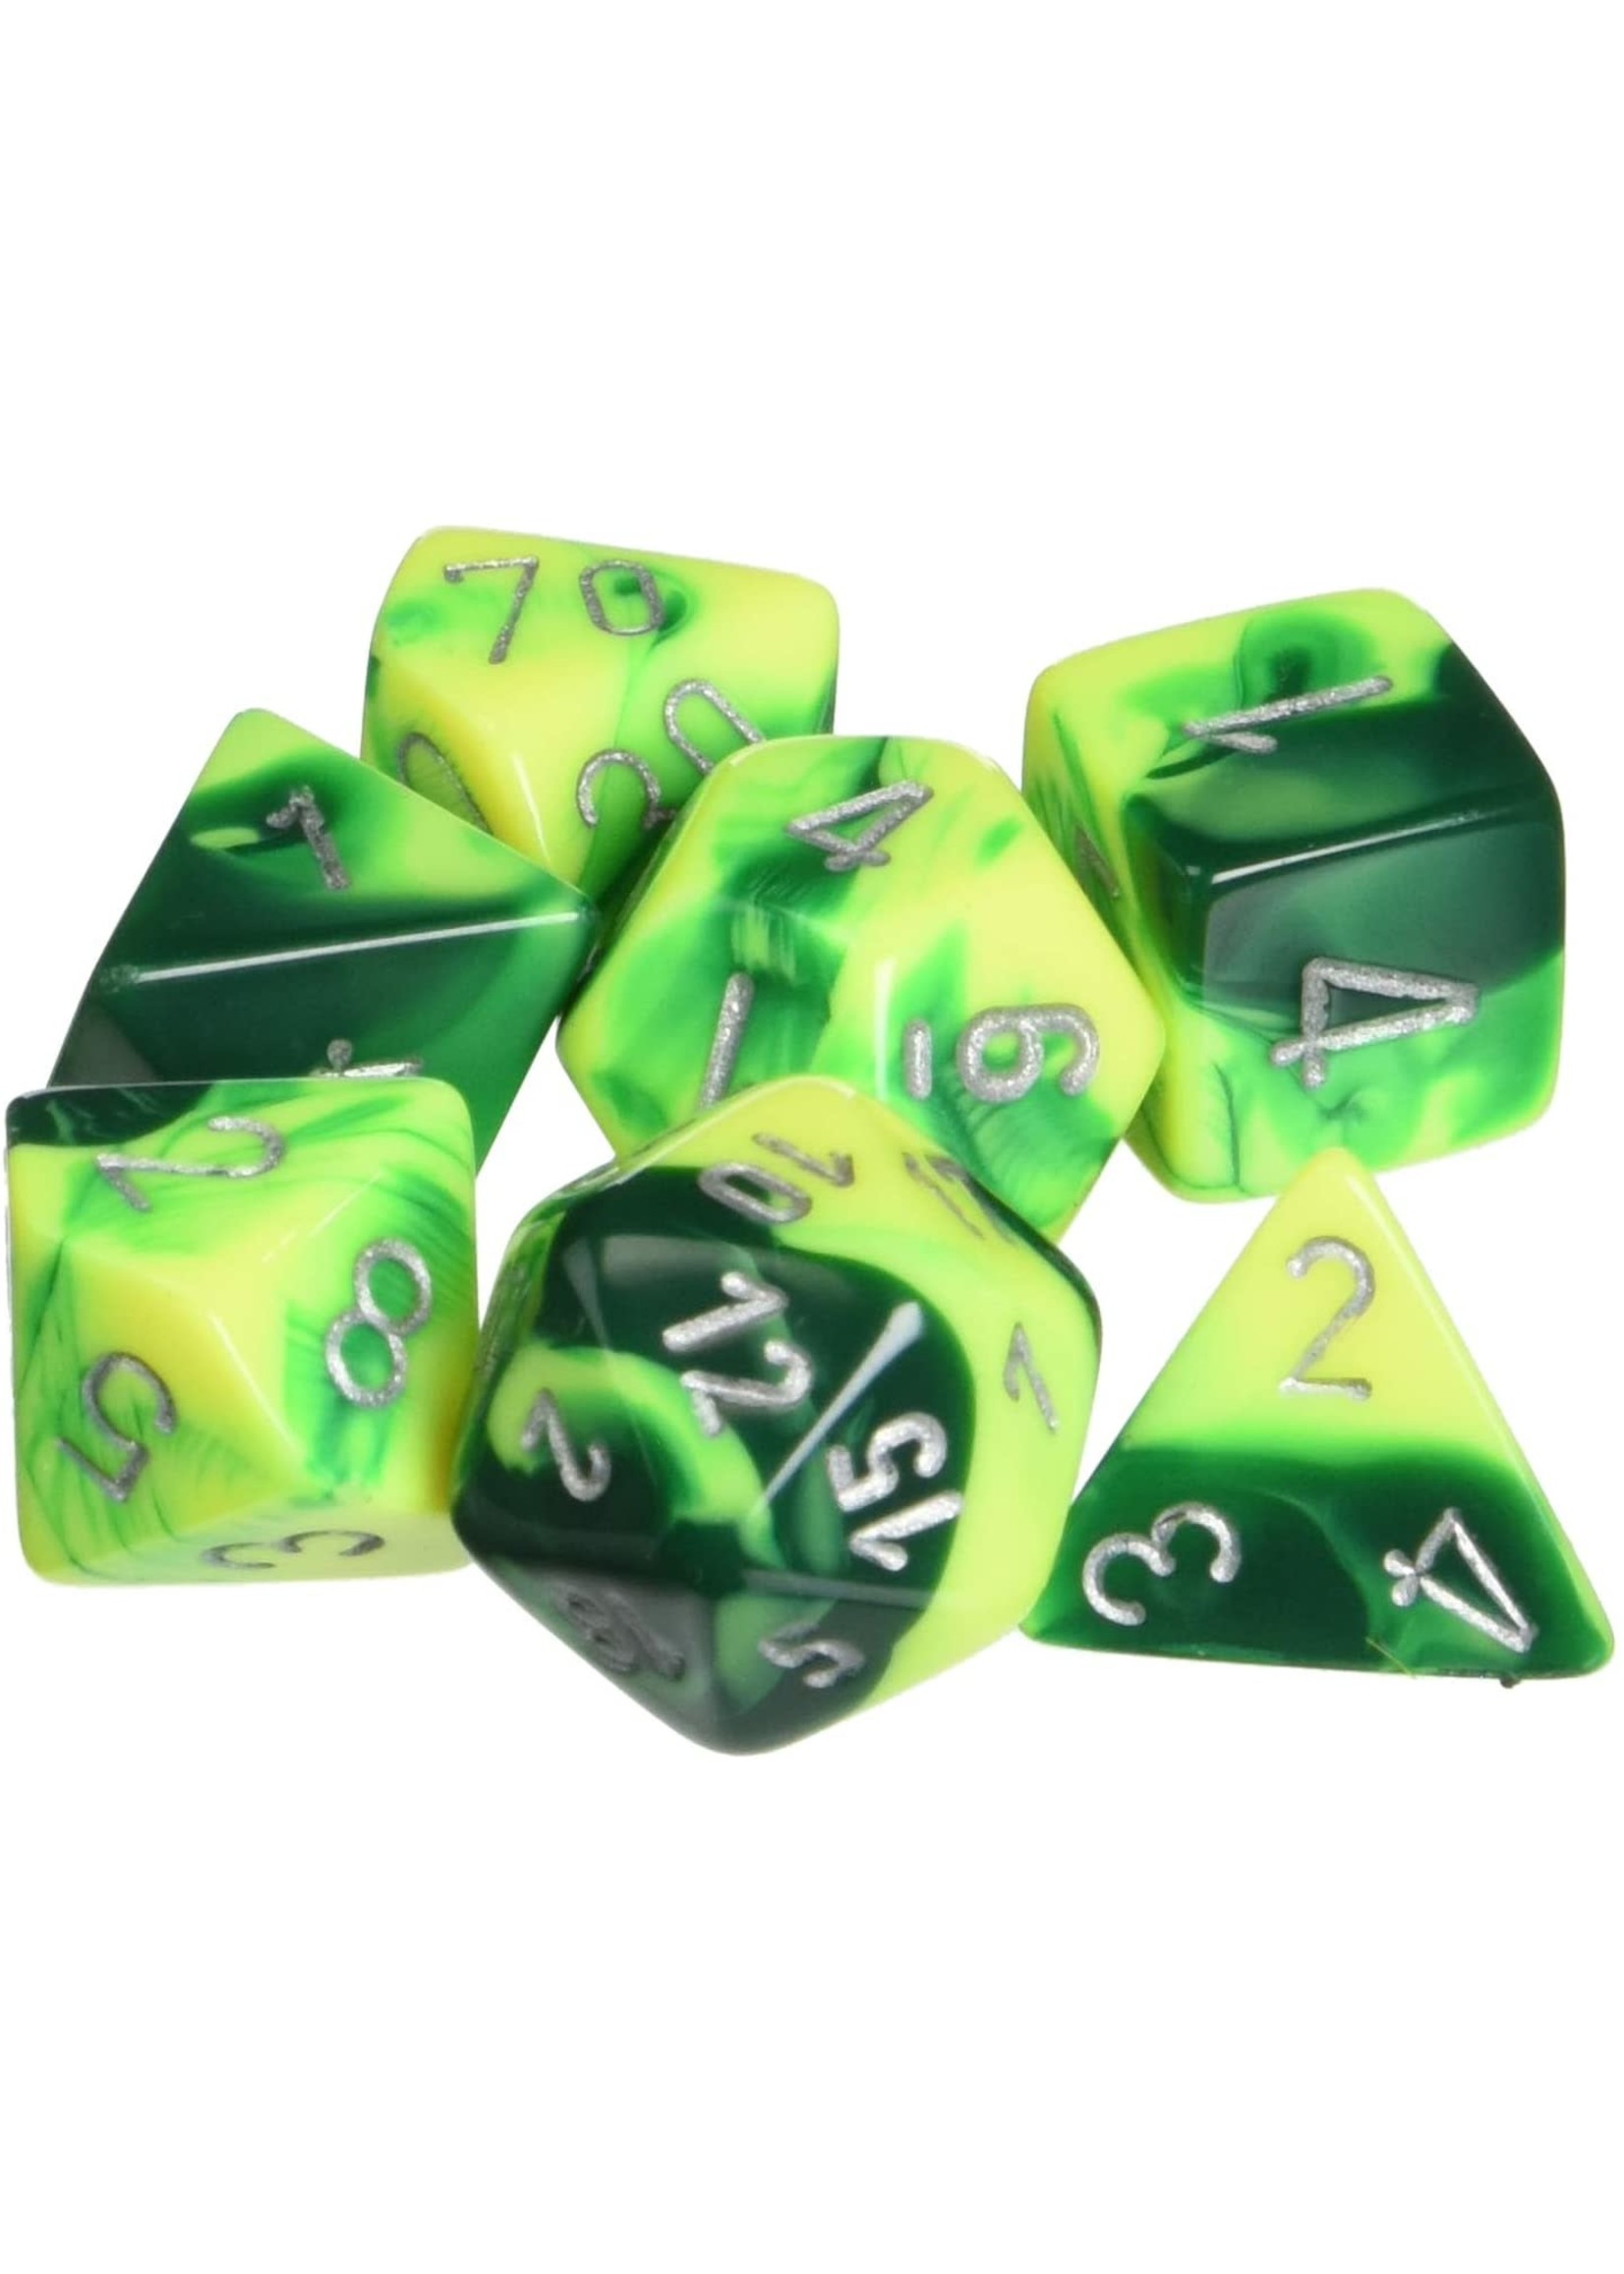 Chessex Gemini Poly 7 set: Green & Yellow w/ Silver